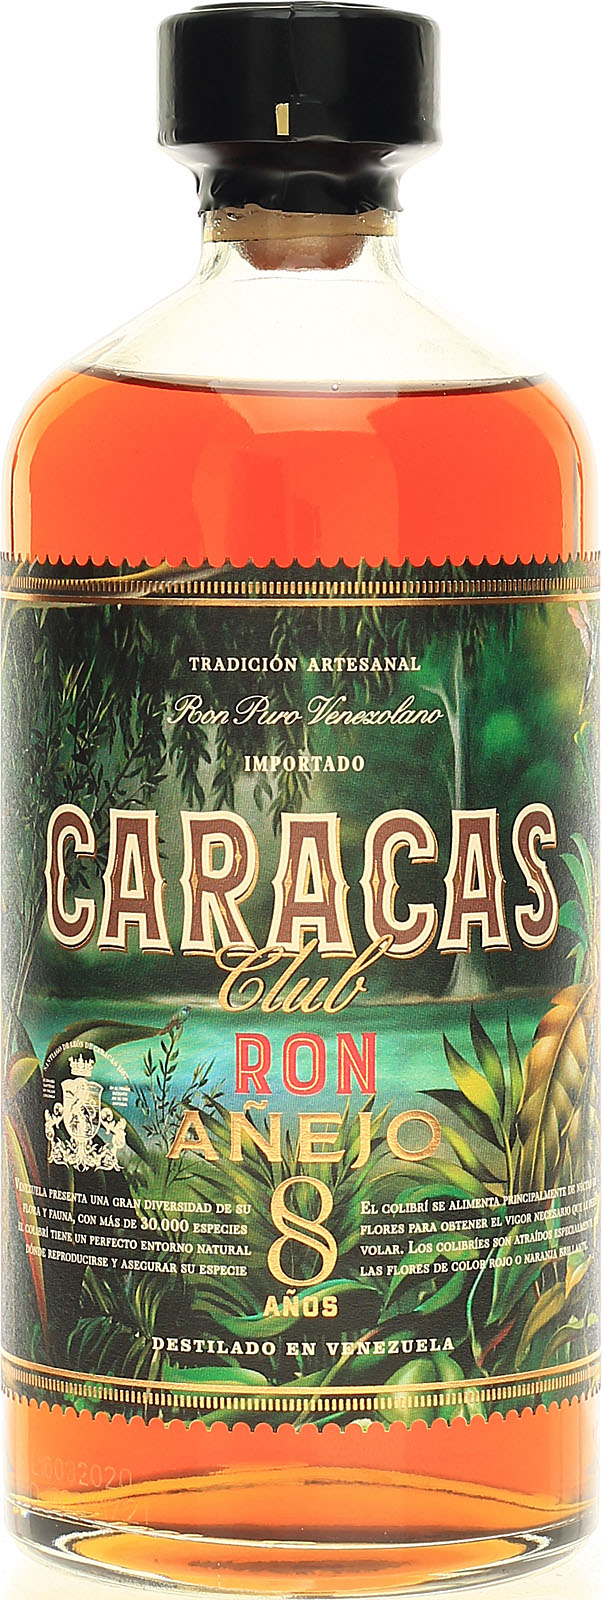 Caracas Club Ron Anejo 8 Jahre 0,7 Liter 40%